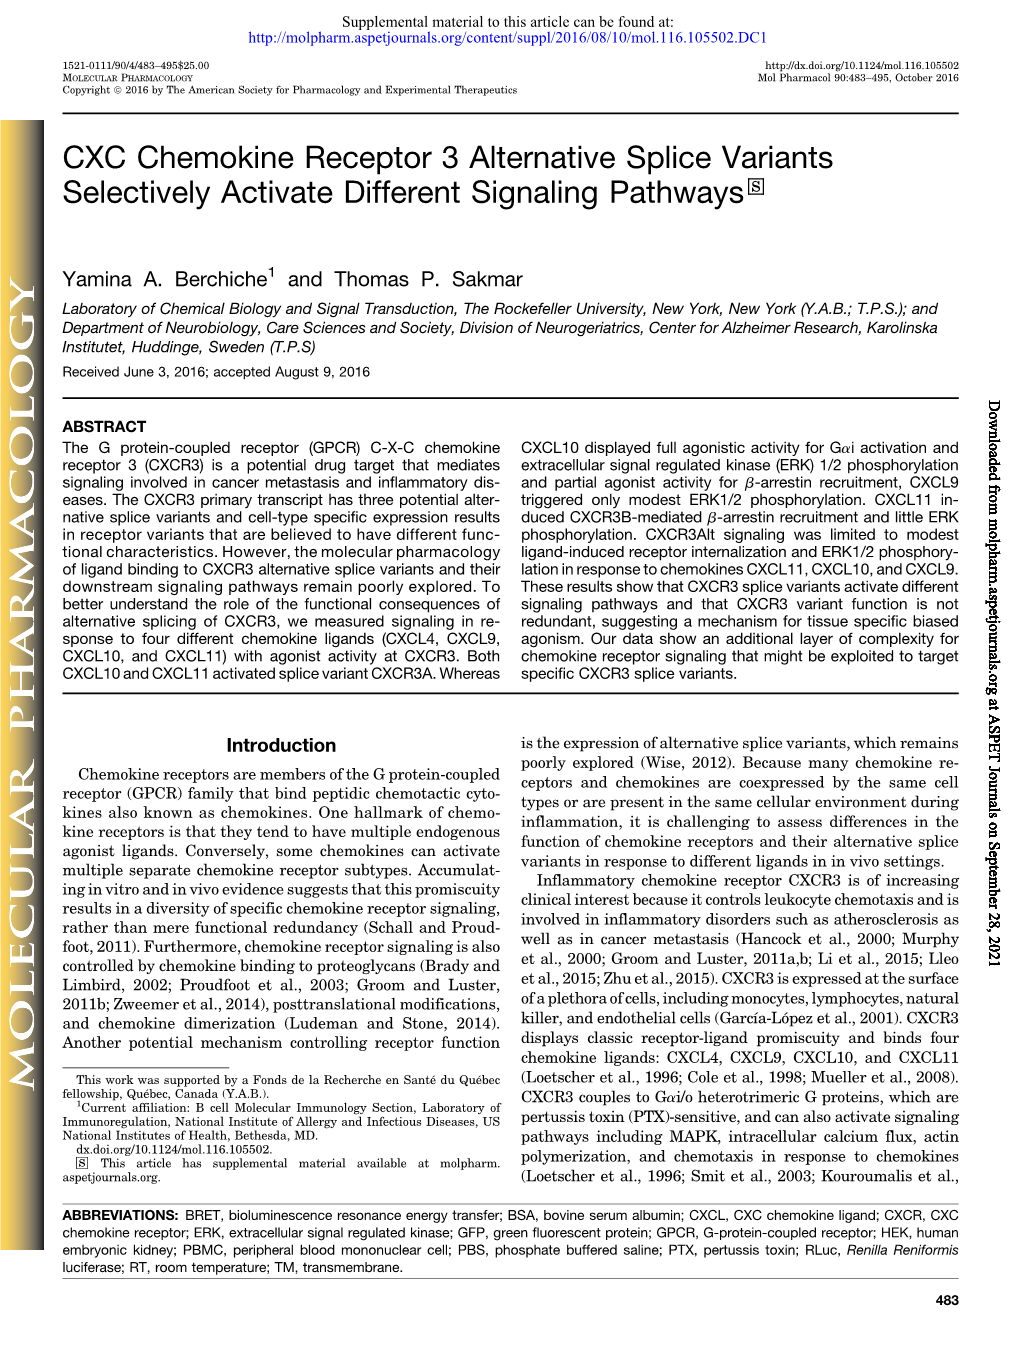 CXC Chemokine Receptor 3 Alternative Splice Variants Selectively Activate Different Signaling Pathways S